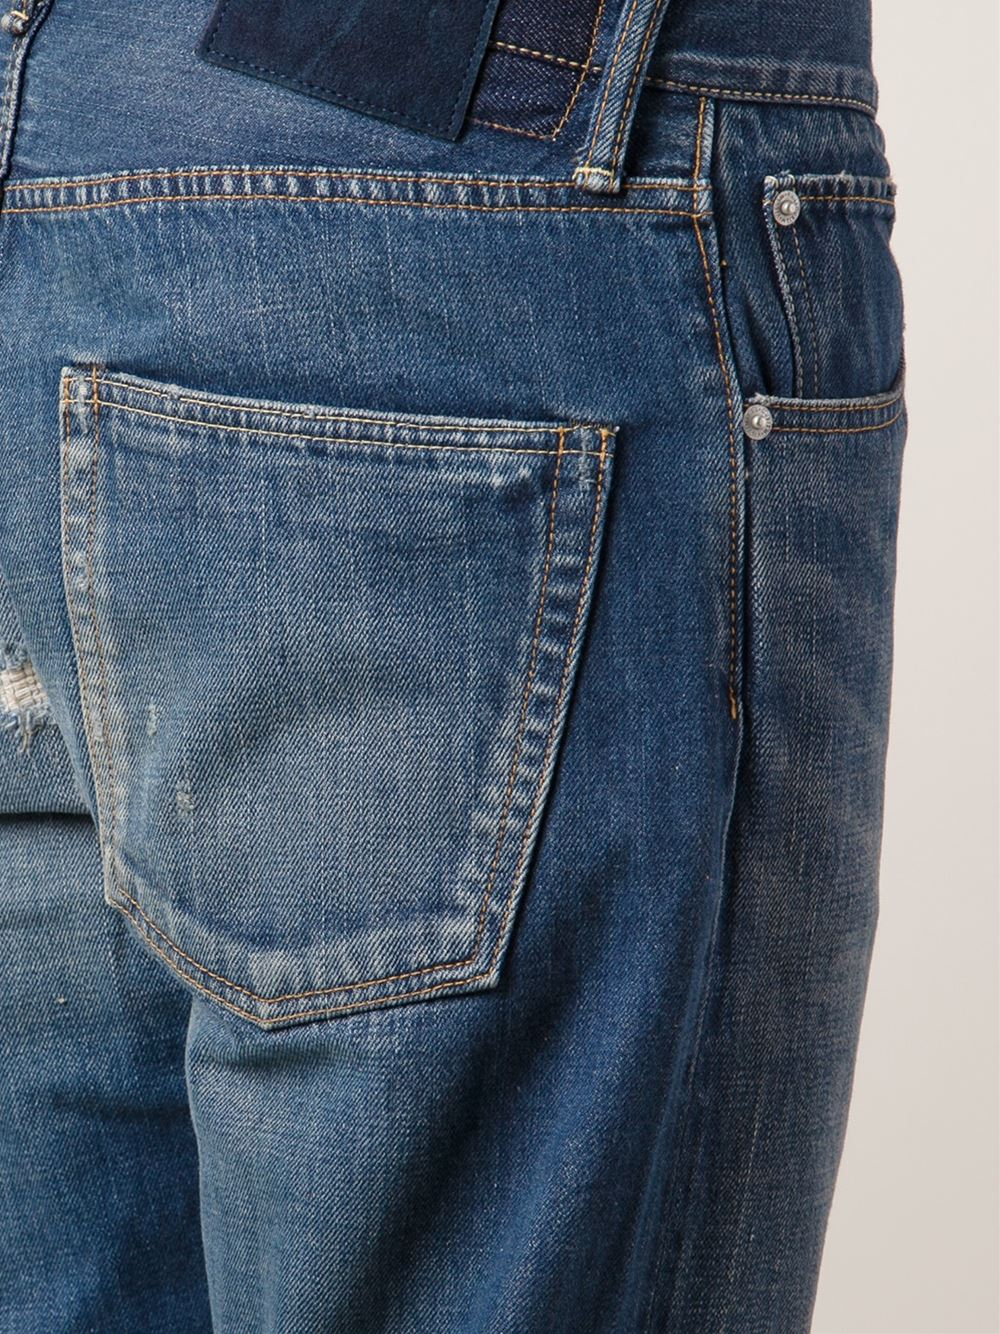 Visvim 'Social Sculpture' Jeans in Blue for Men - Lyst